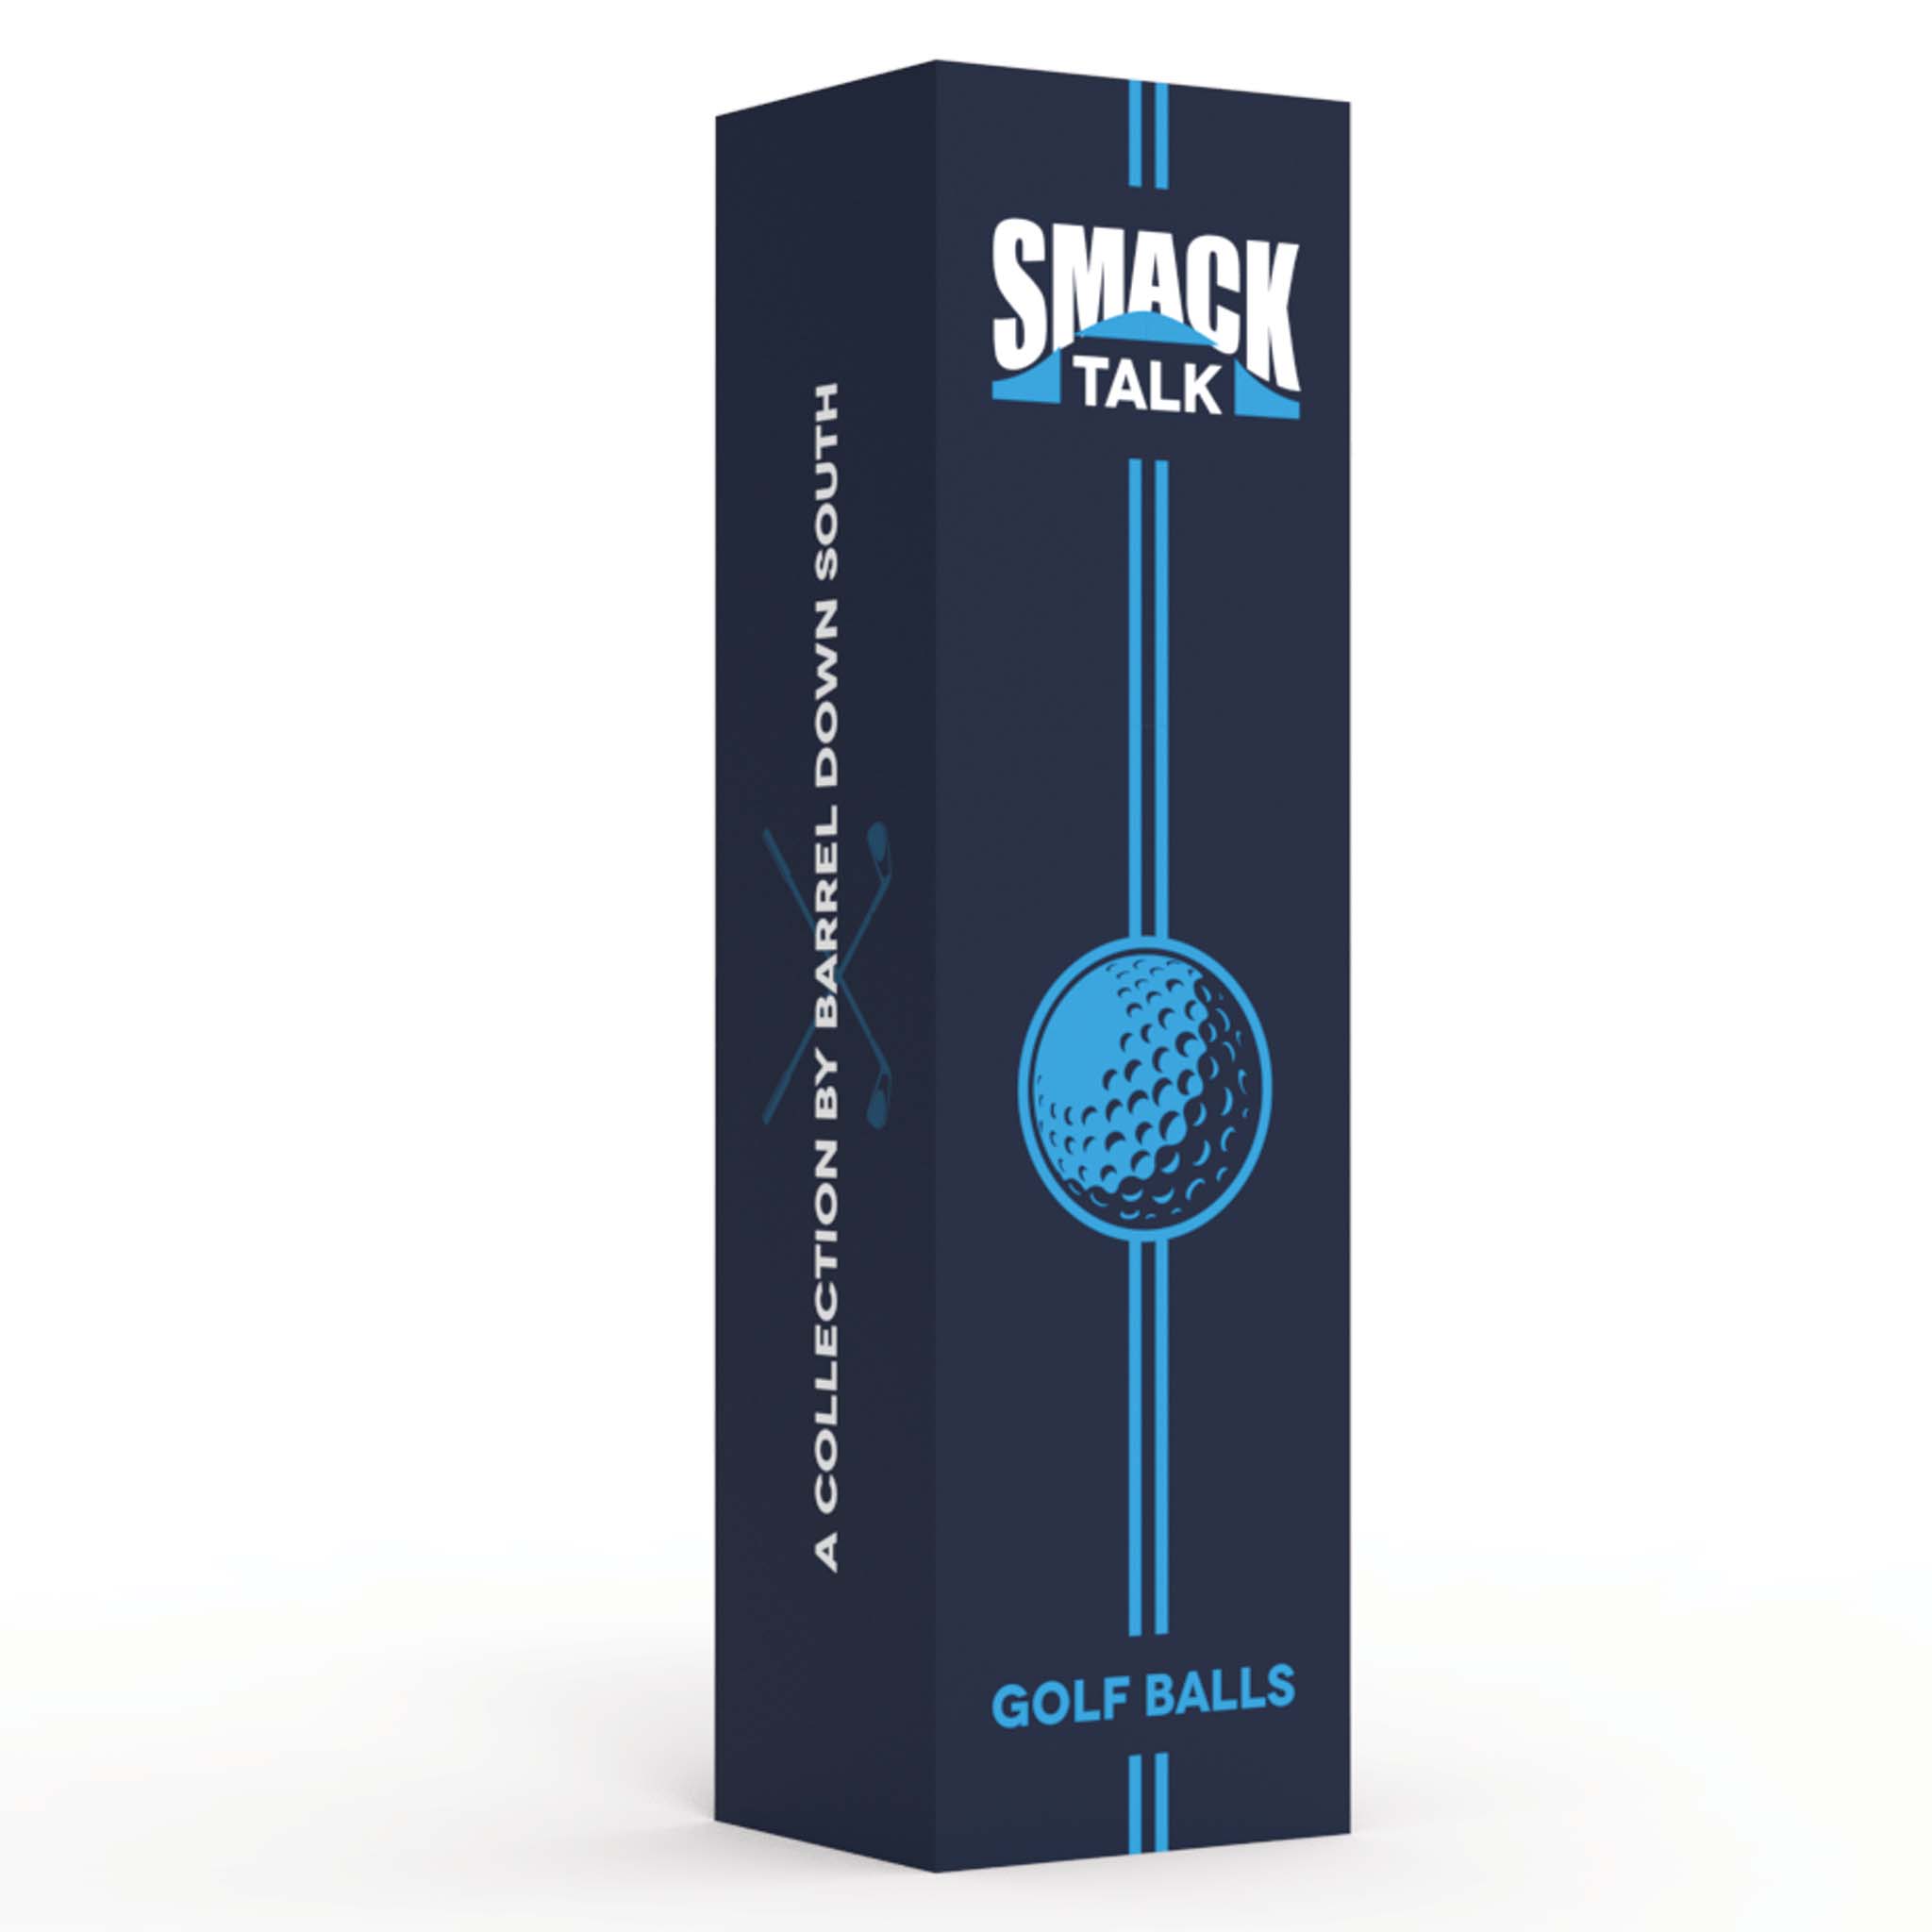 Smack Talk Golf Balls Volume 2 Golfing Gift Golf Cart - Father's Day Gift